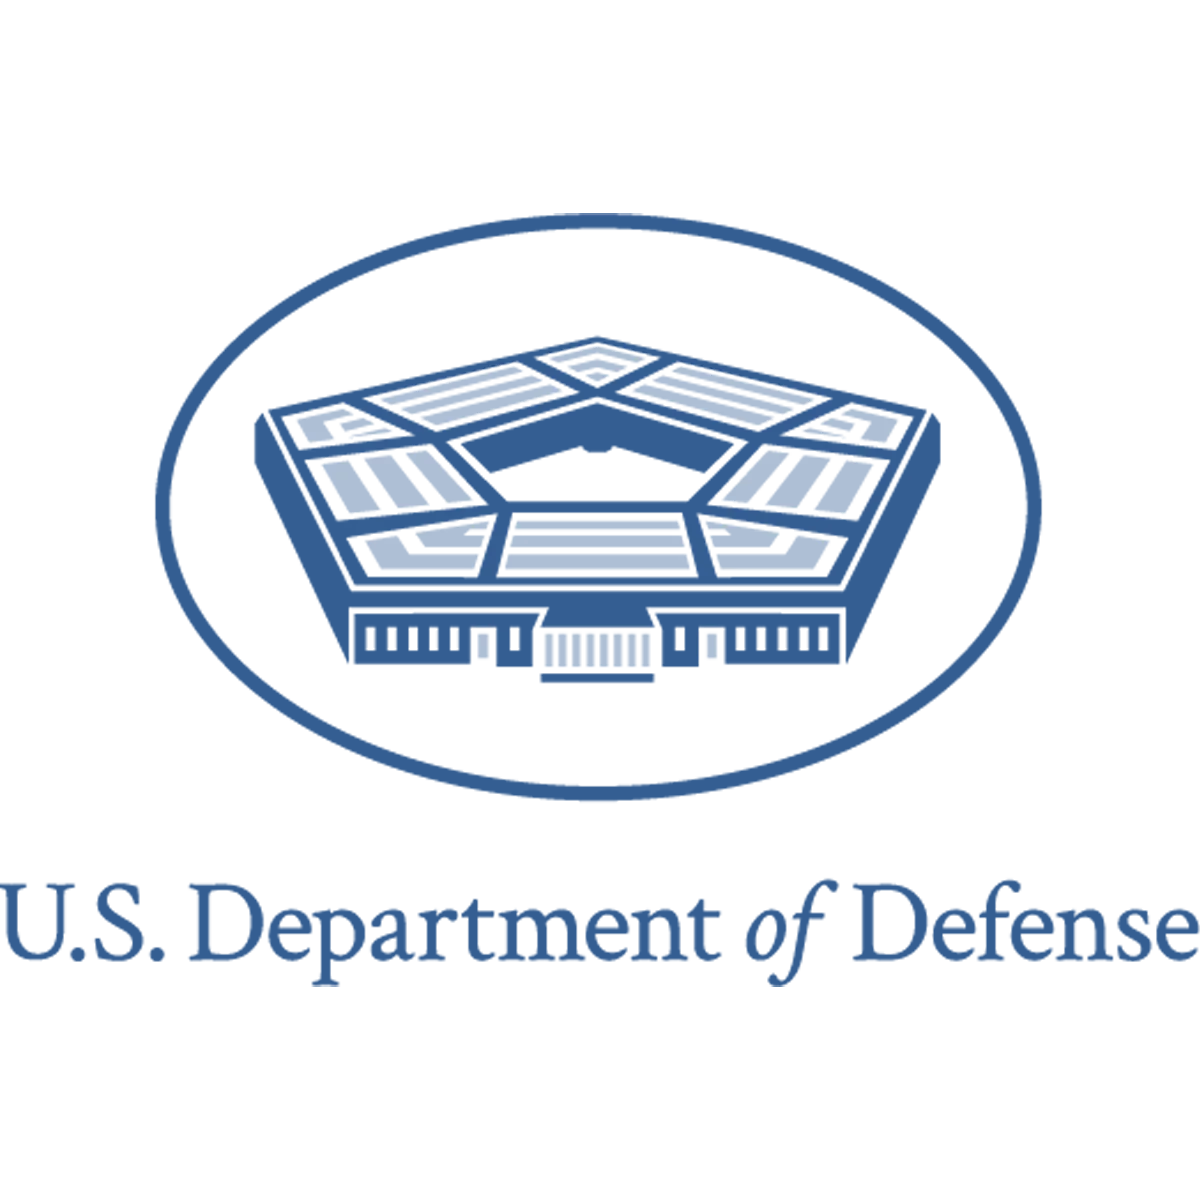 United States Department of Defense